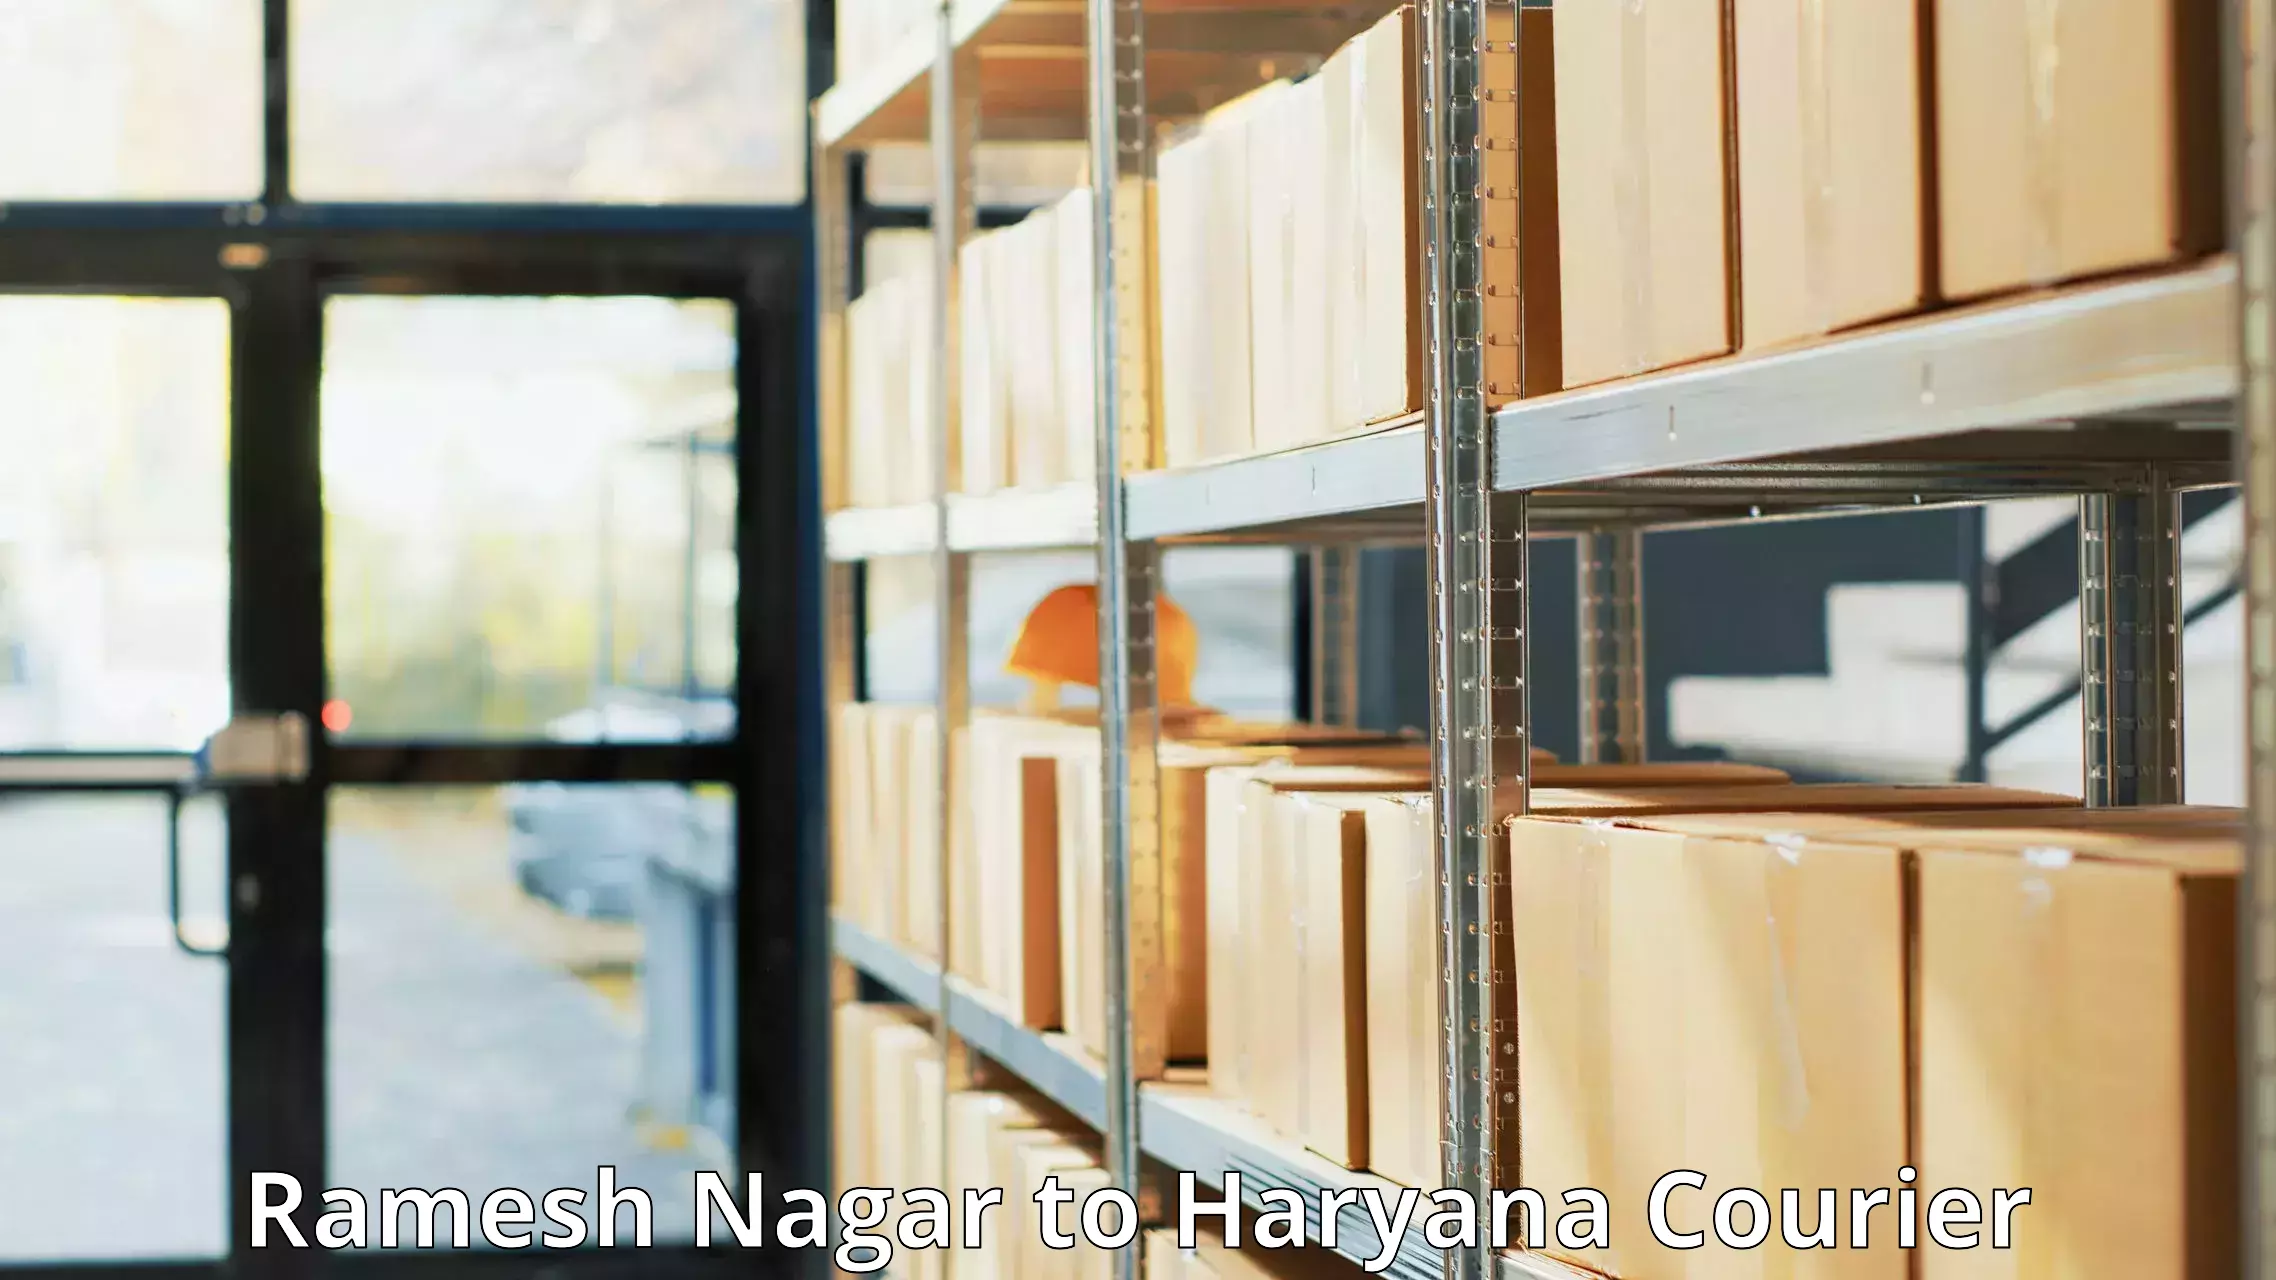 Nationwide delivery network Ramesh Nagar to Haryana